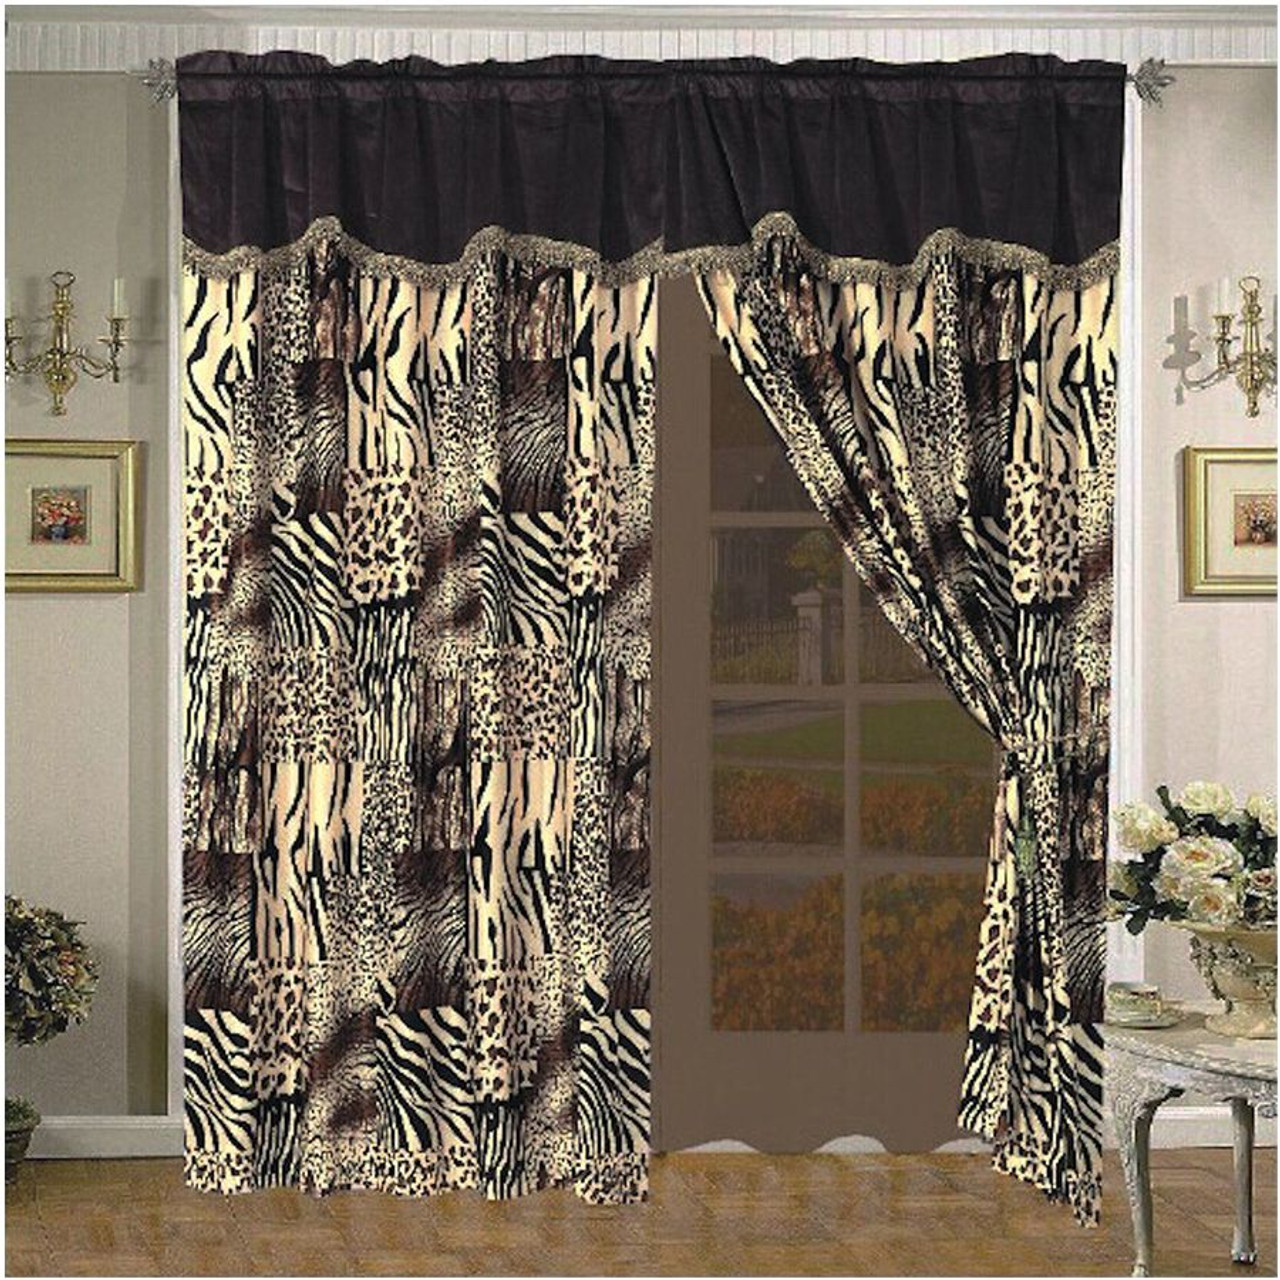 Multi Animal Print Black, Brown, Tan and Charcoal Grey Window Curtain / Drape Set with Valance